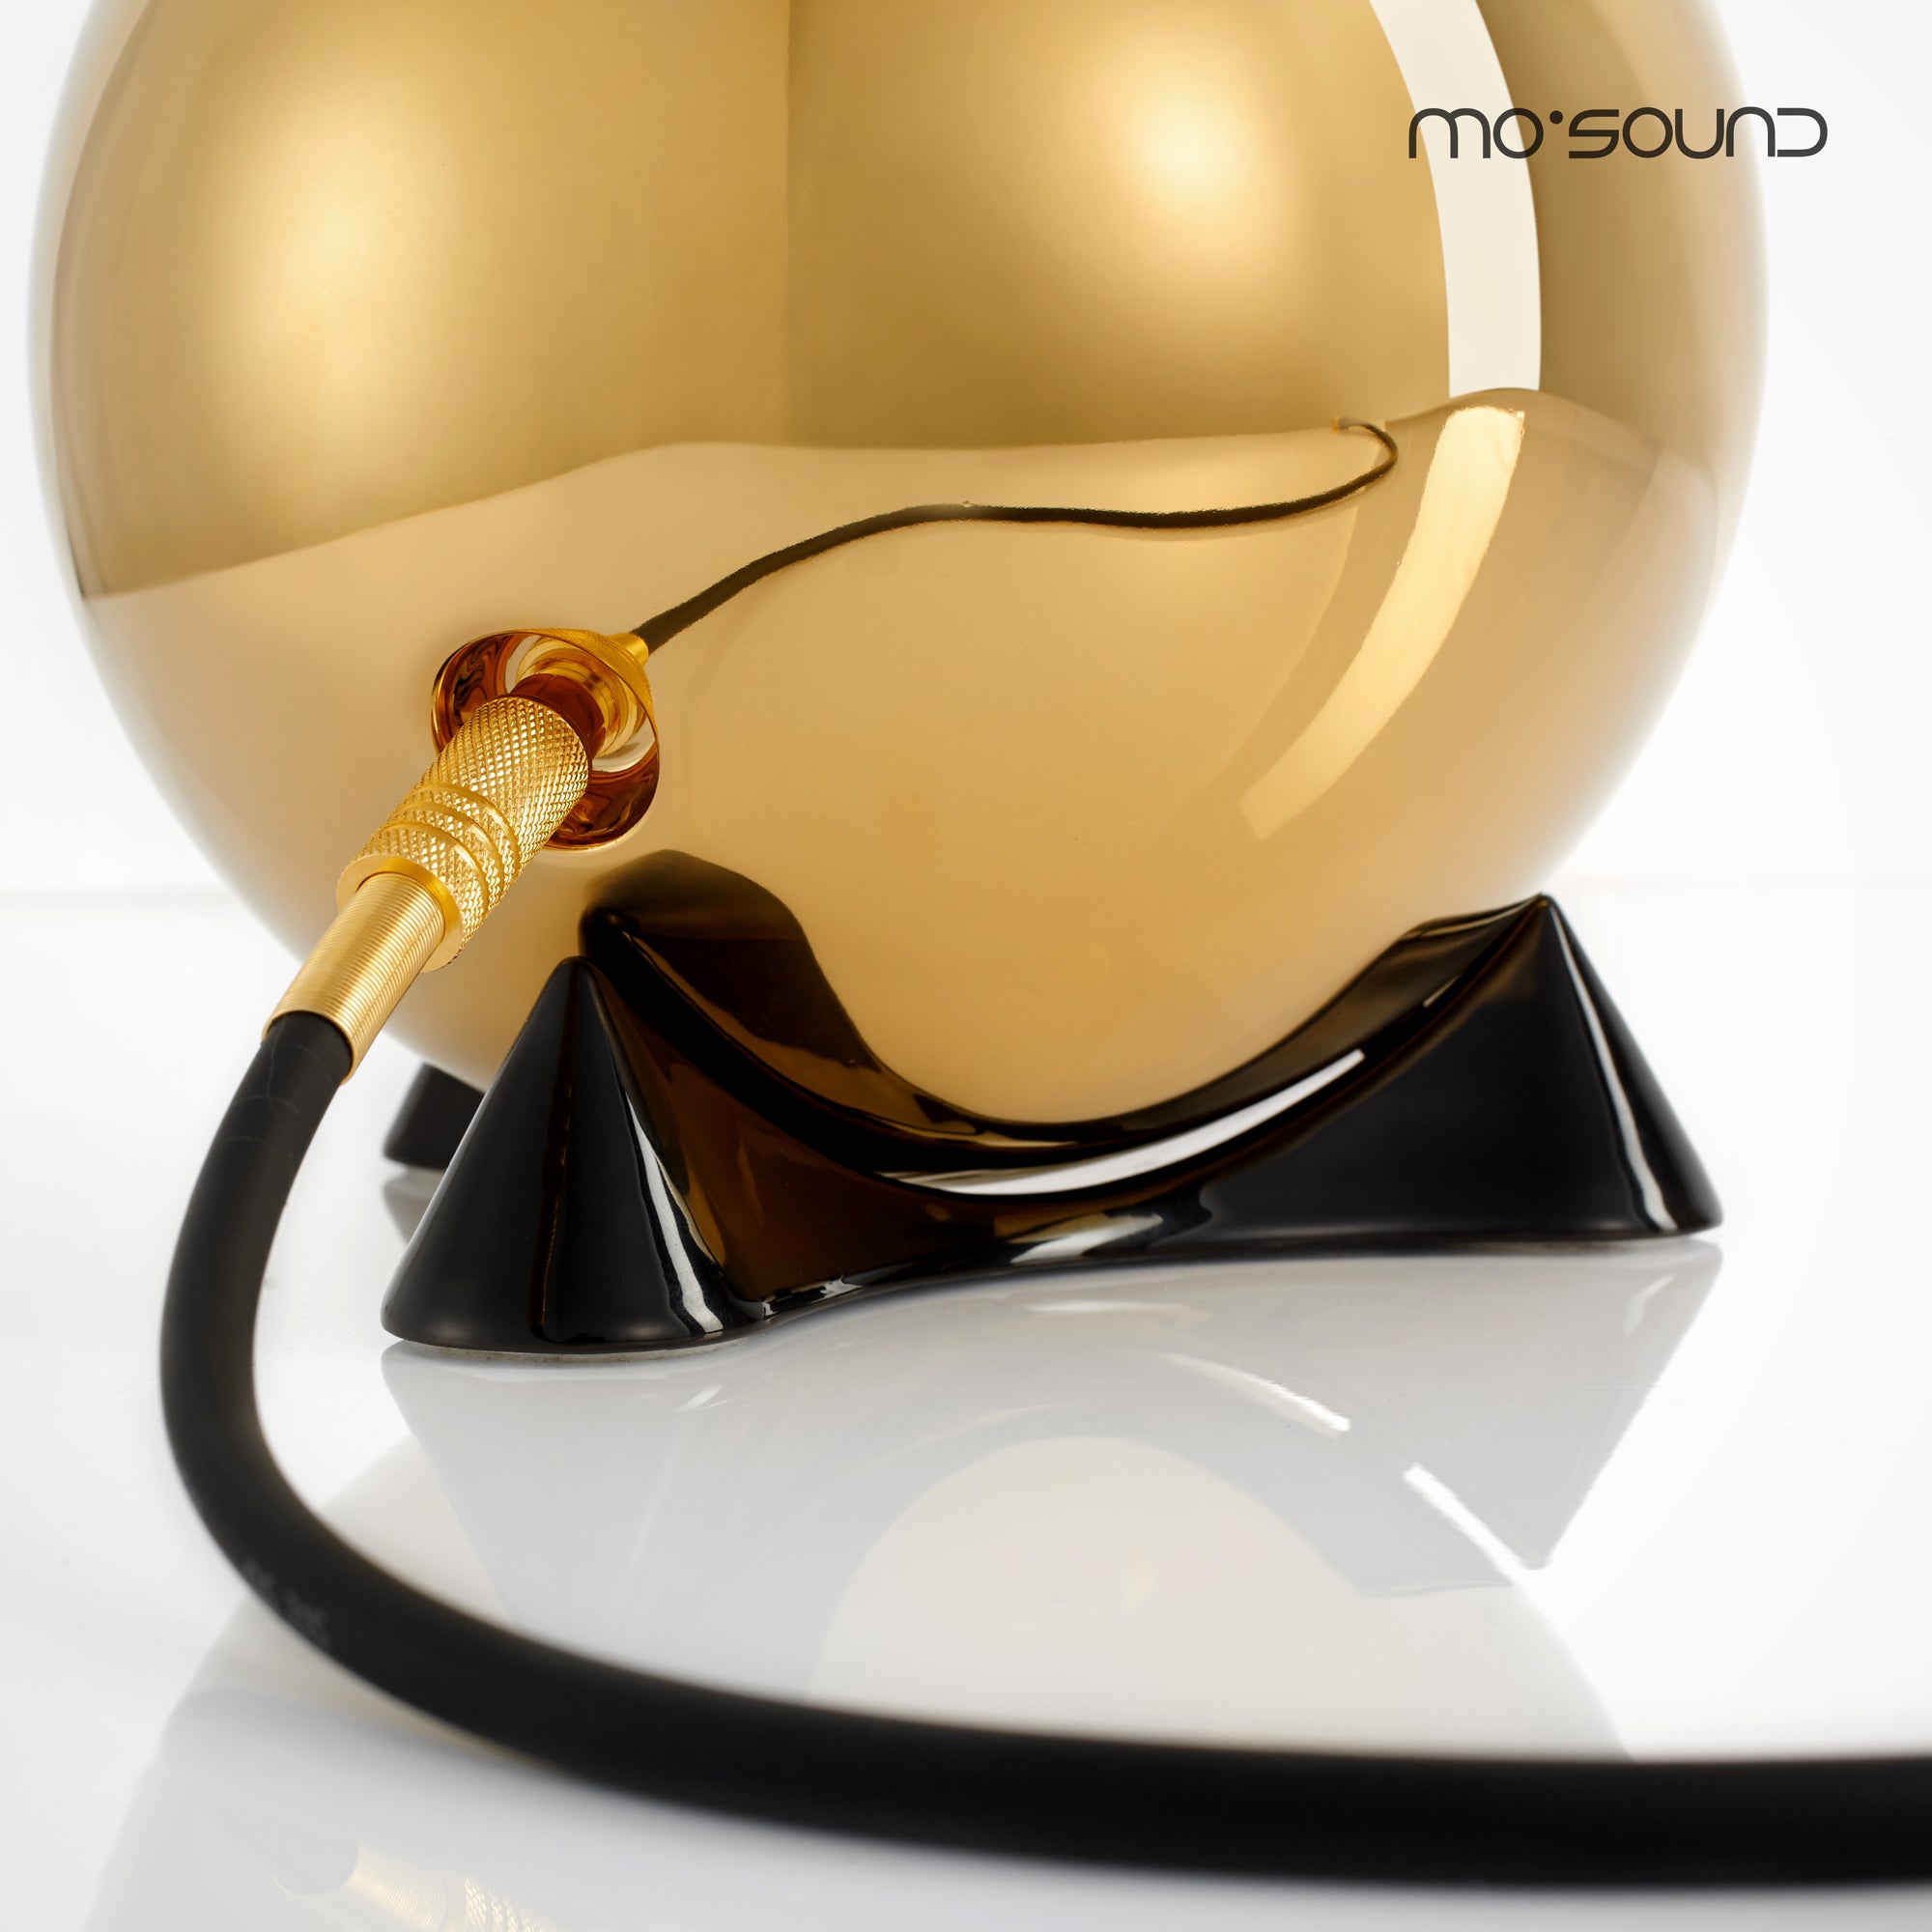 mo° sound - ball speaker superior - gold